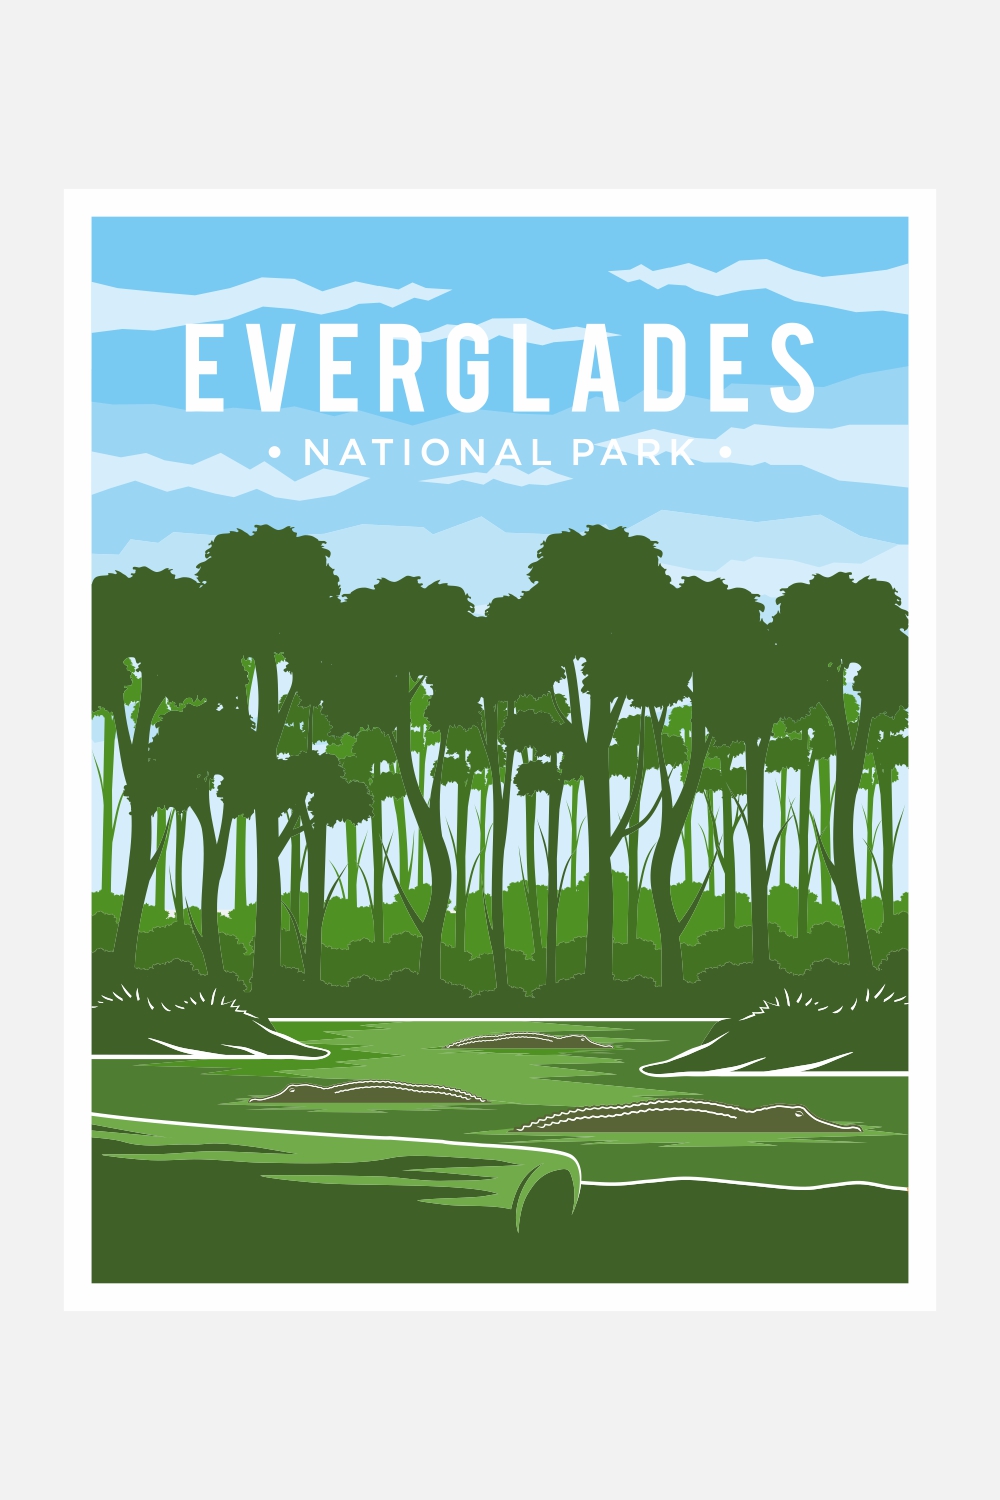 Everglades National Park poster vector illustration design – Only $8 pinterest preview image.